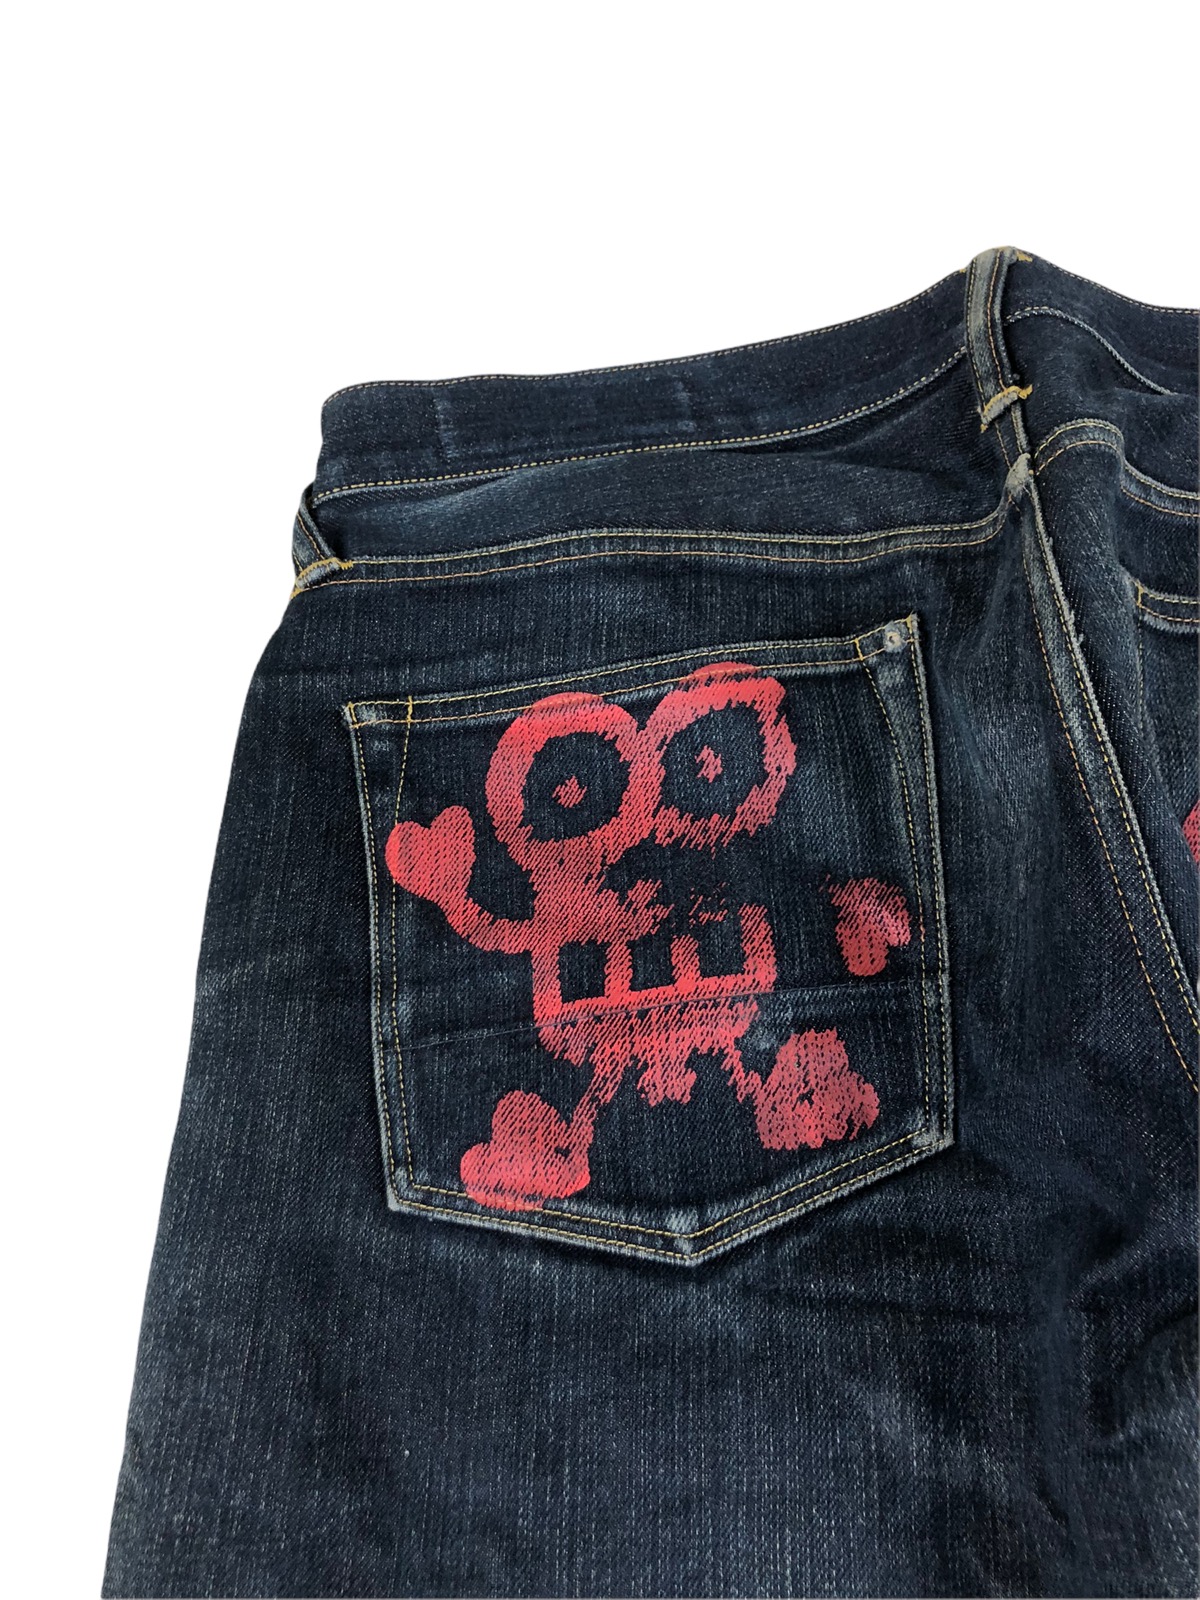 Evisu Red Robot Denim Jeans - 3